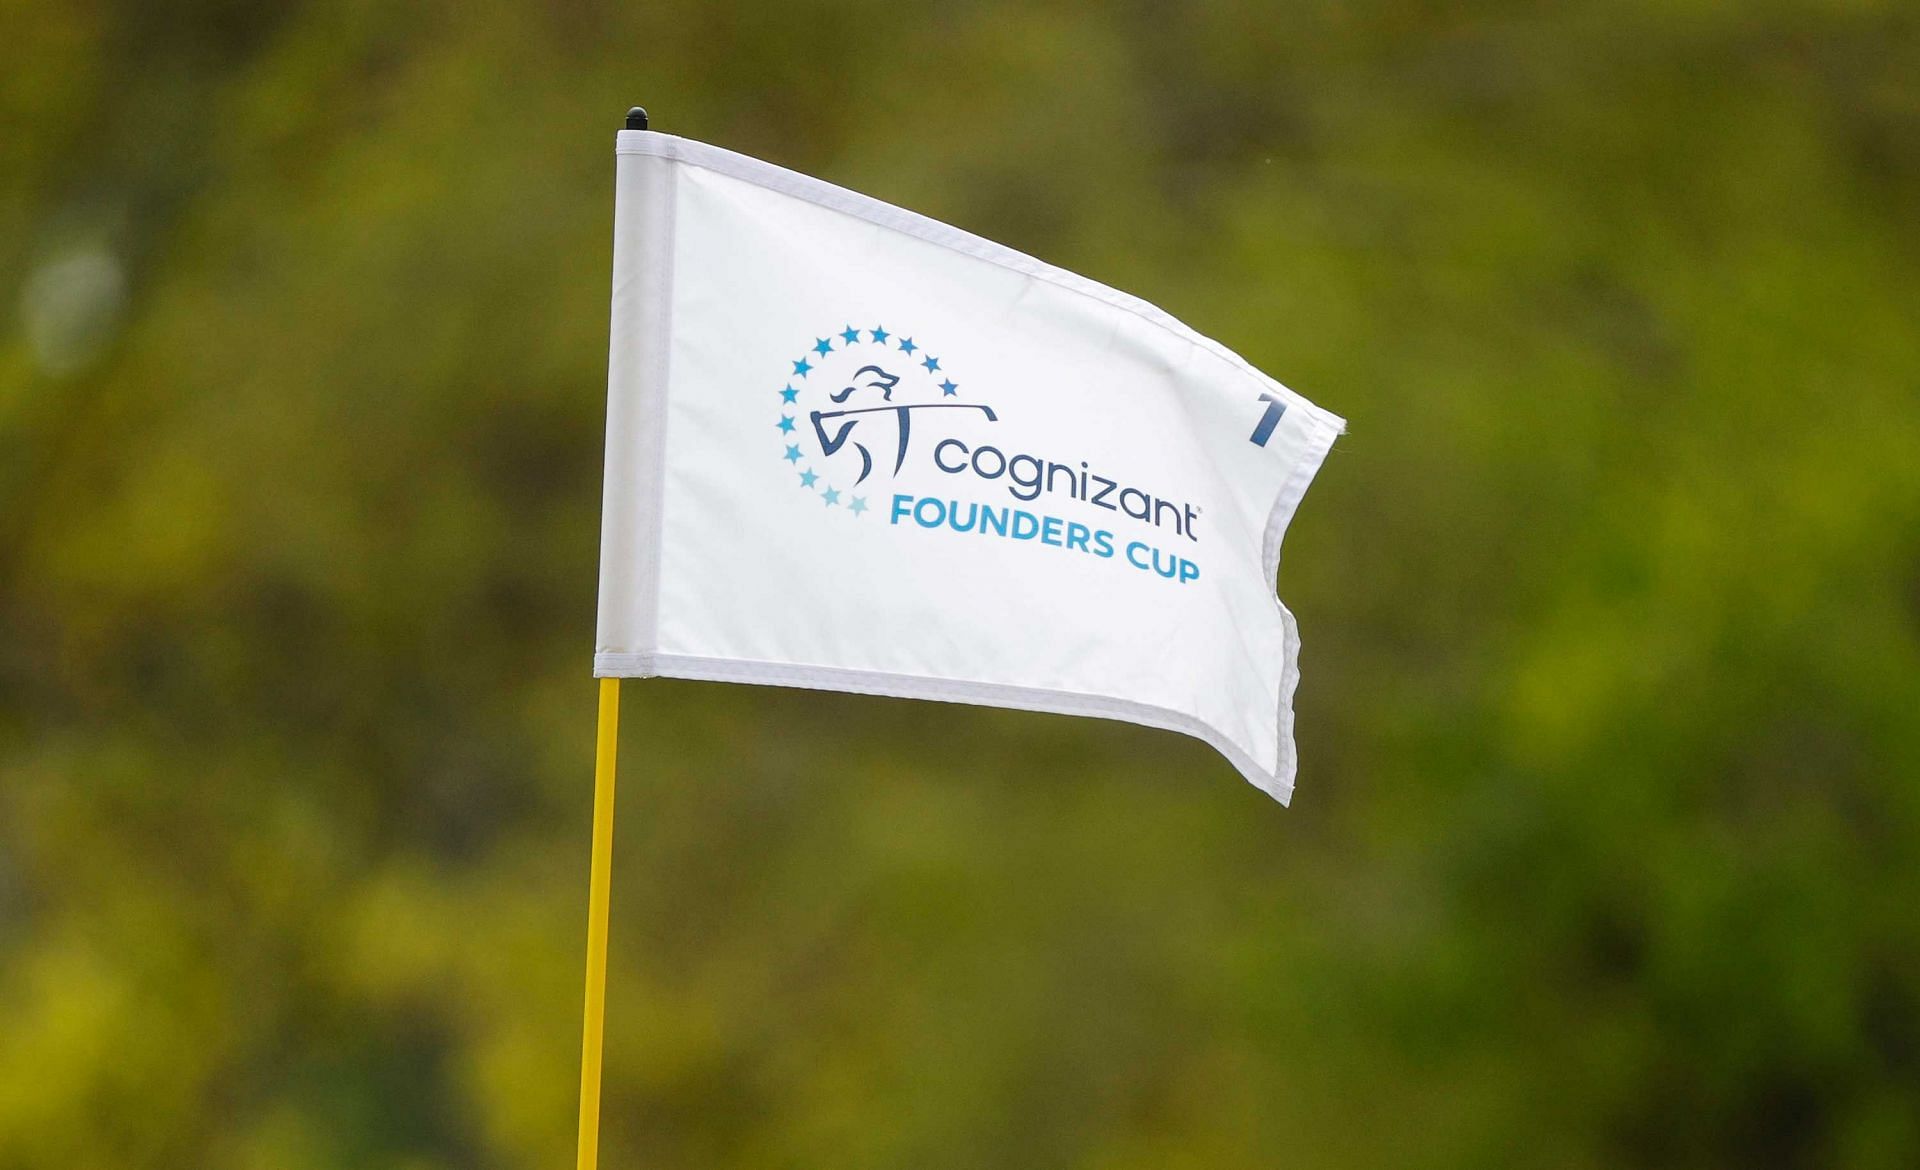 LPGA Cognizant Founders Cup Schedule, venue, prize money, tee times